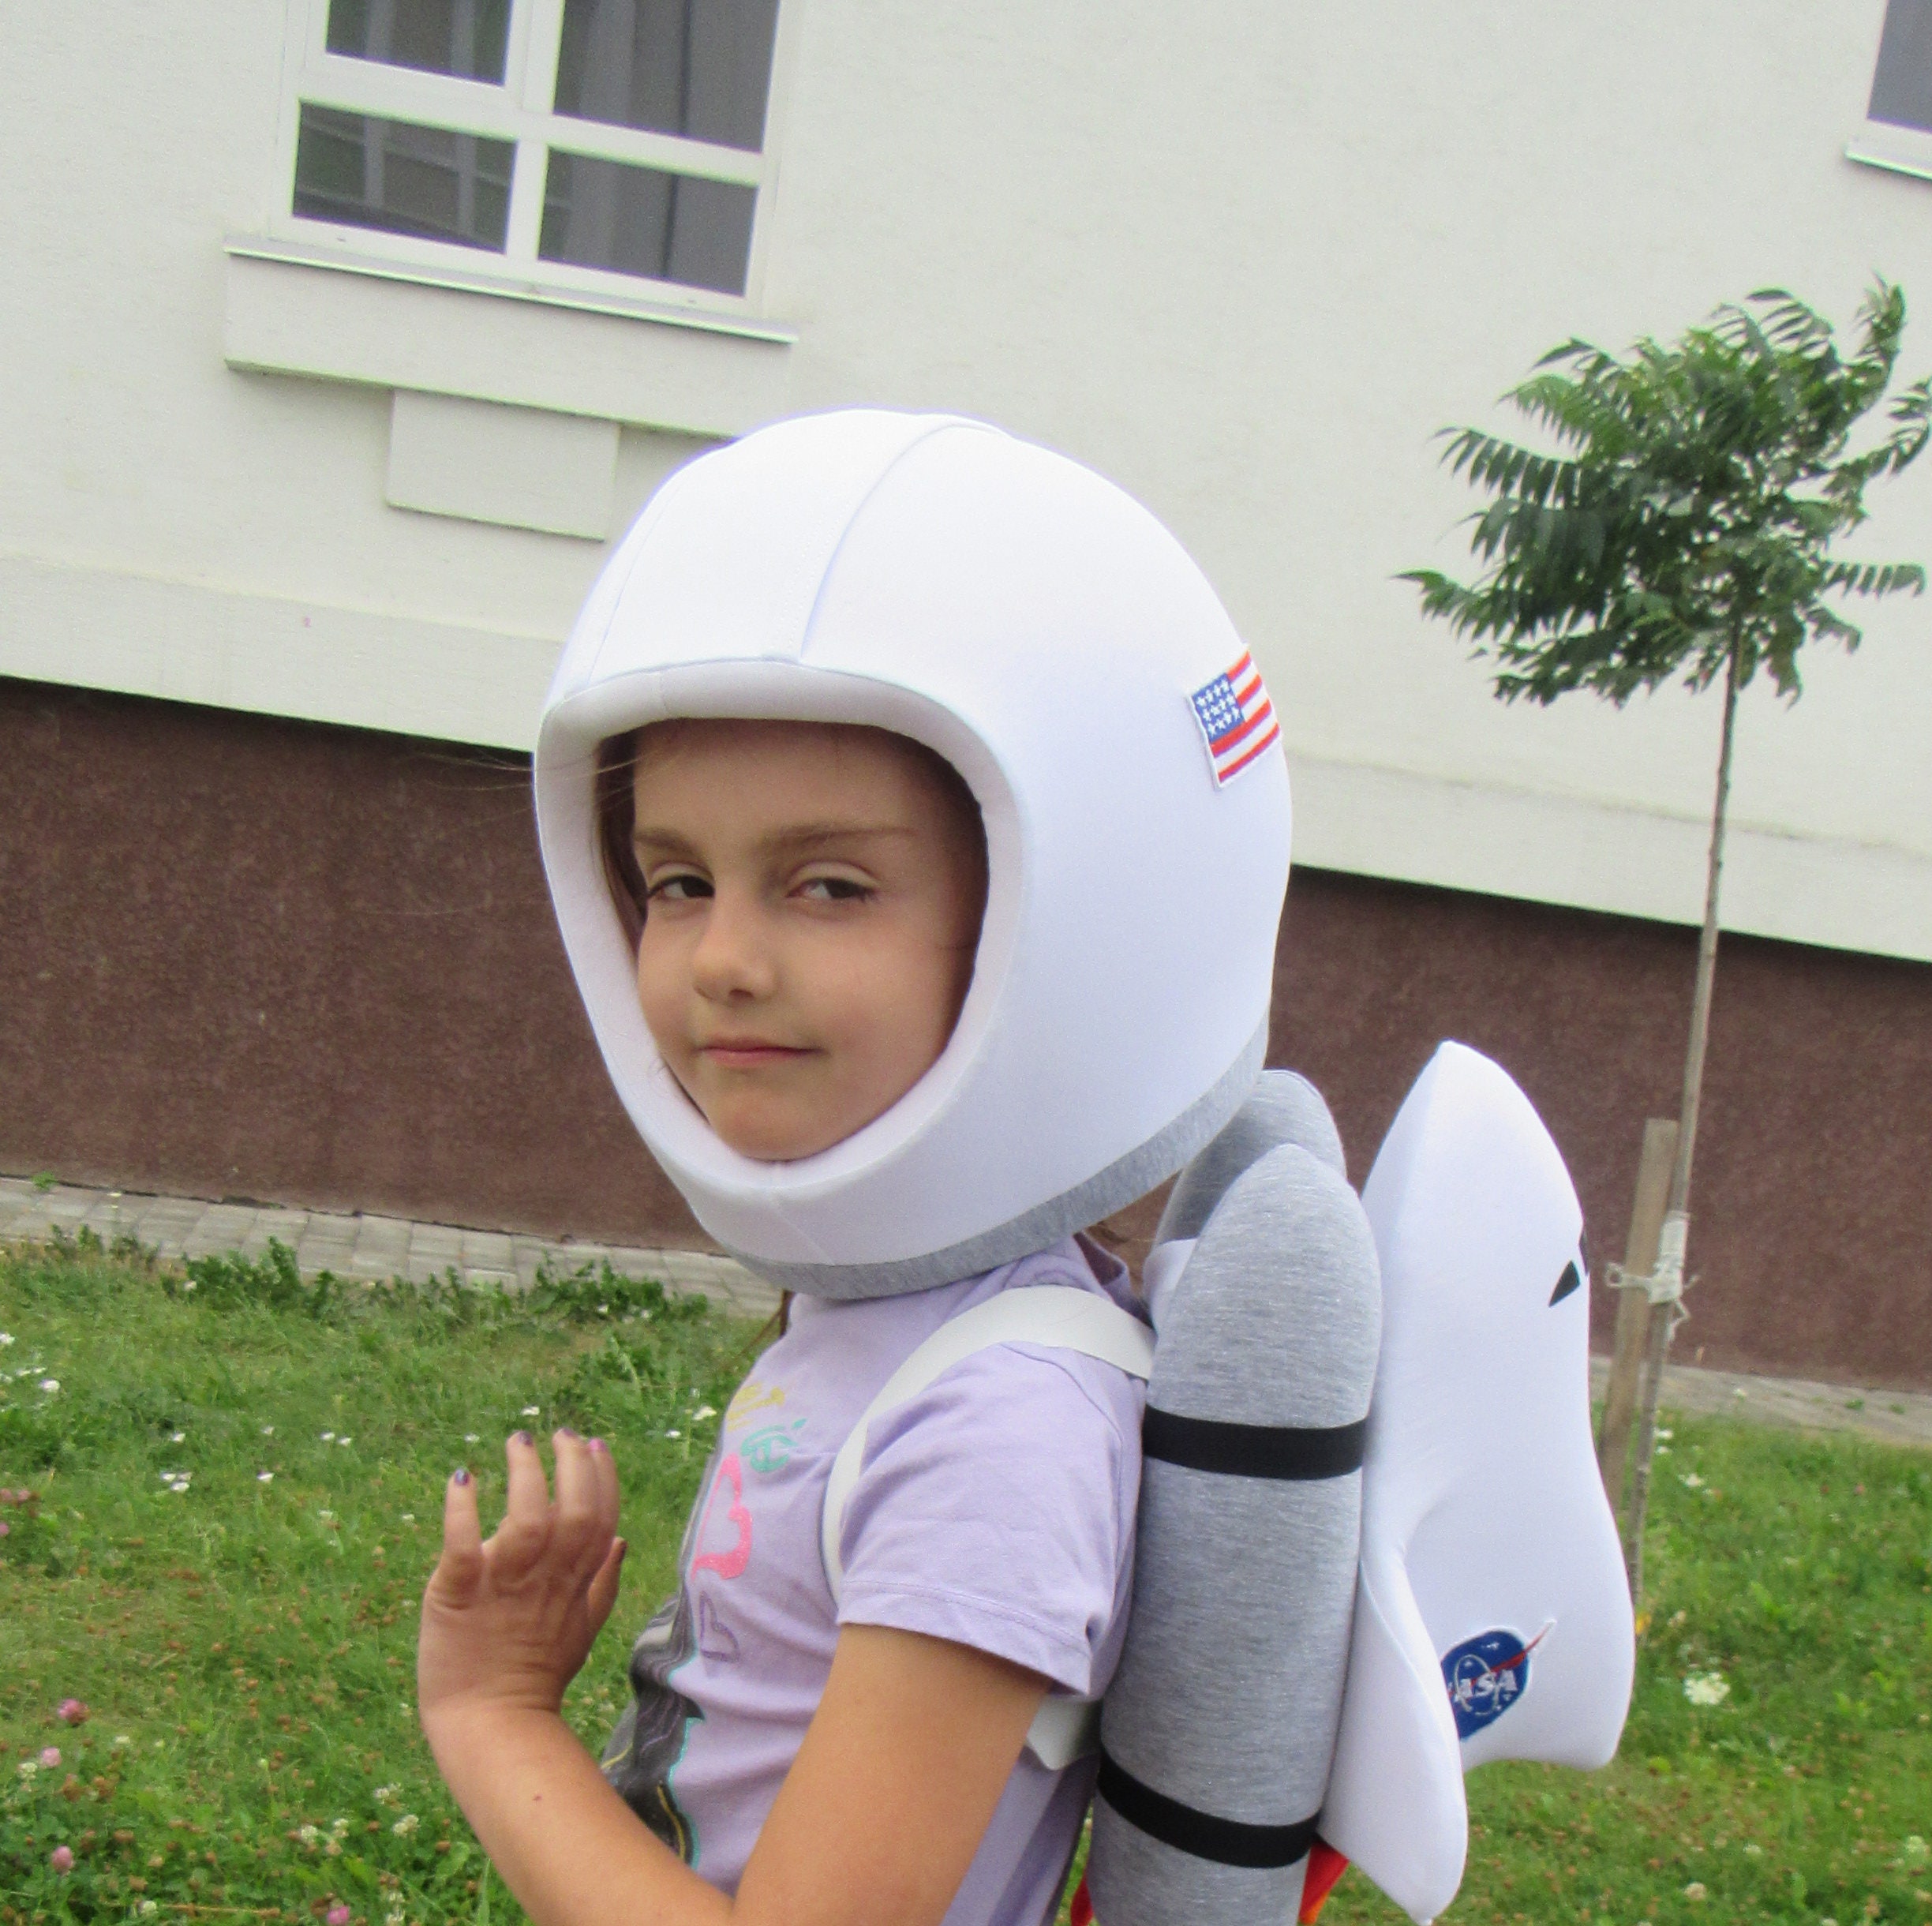 diy-astronaut-helmet-costume-ubicaciondepersonas-cdmx-gob-mx